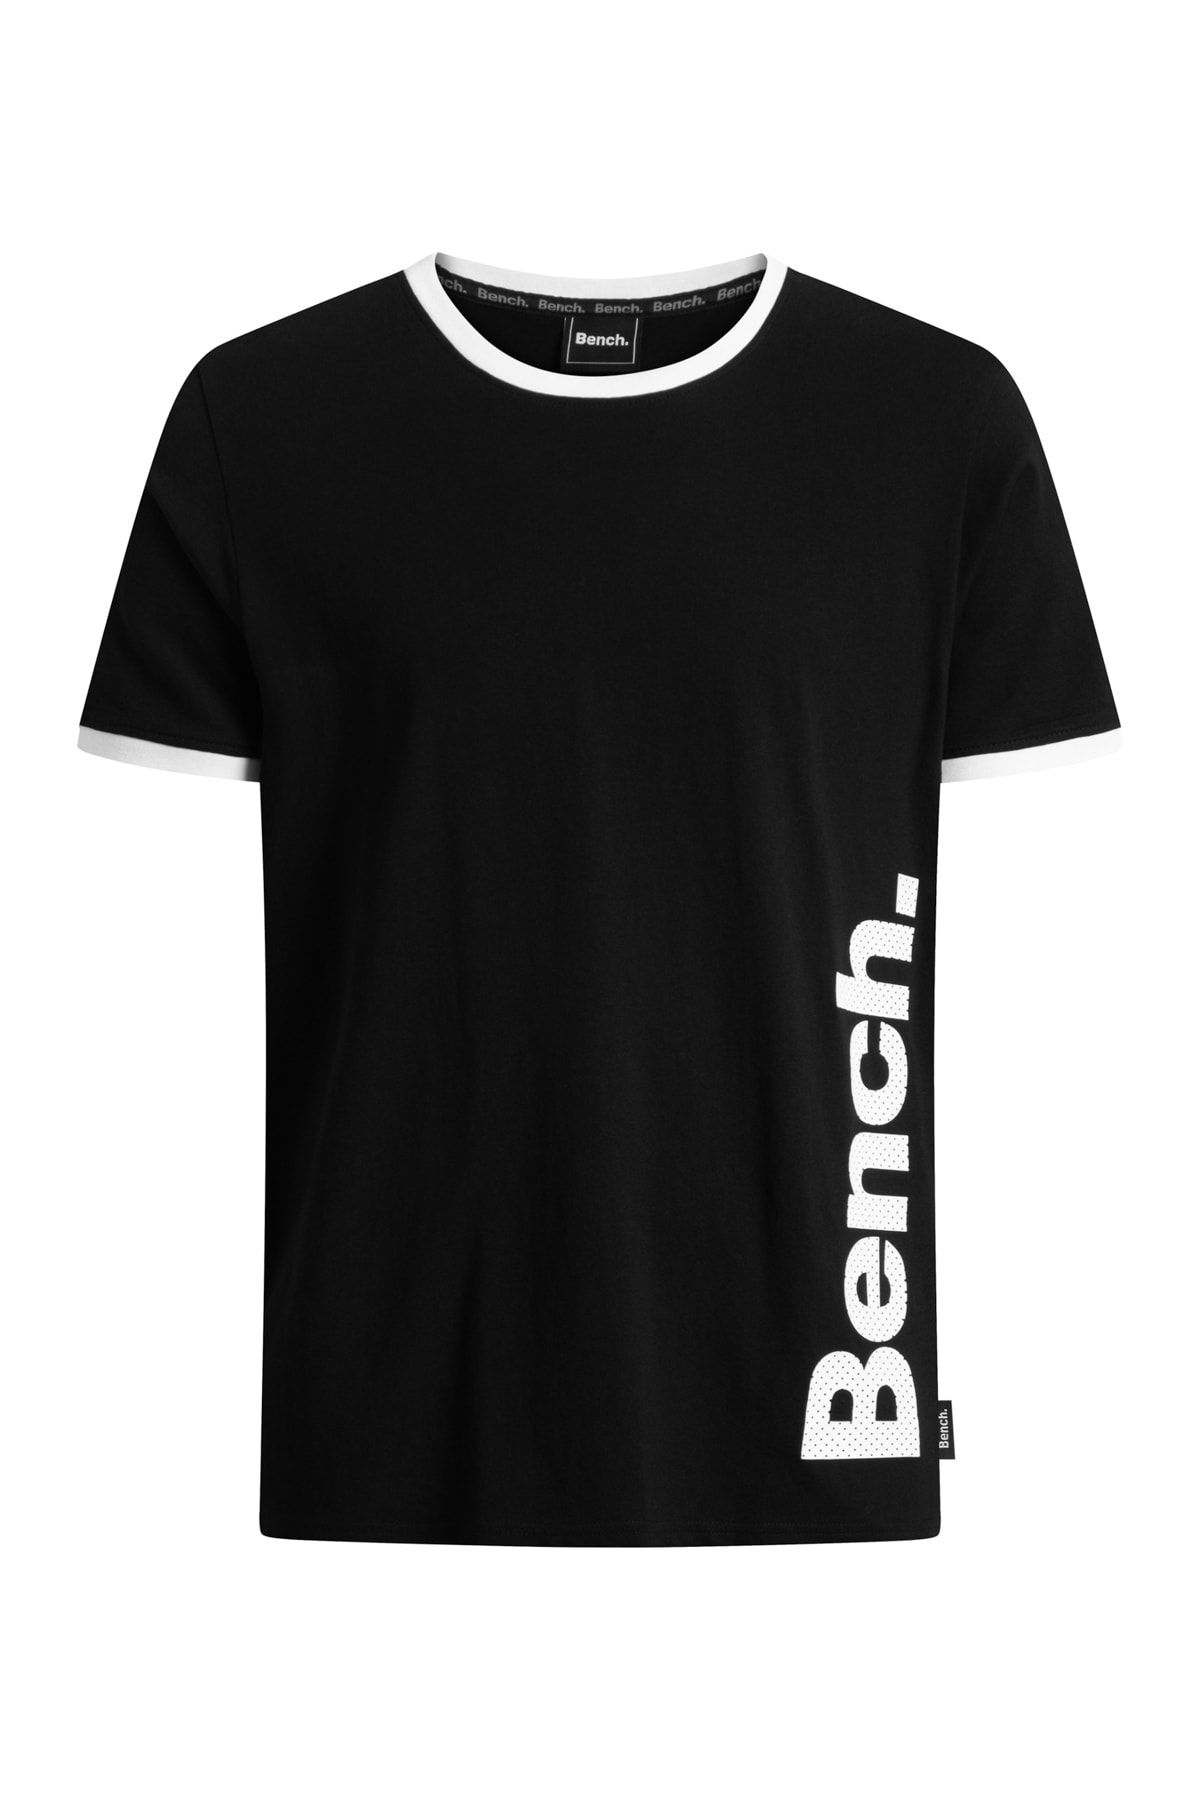 - fit Regular - - T-Shirt Trendyol Black BENCH